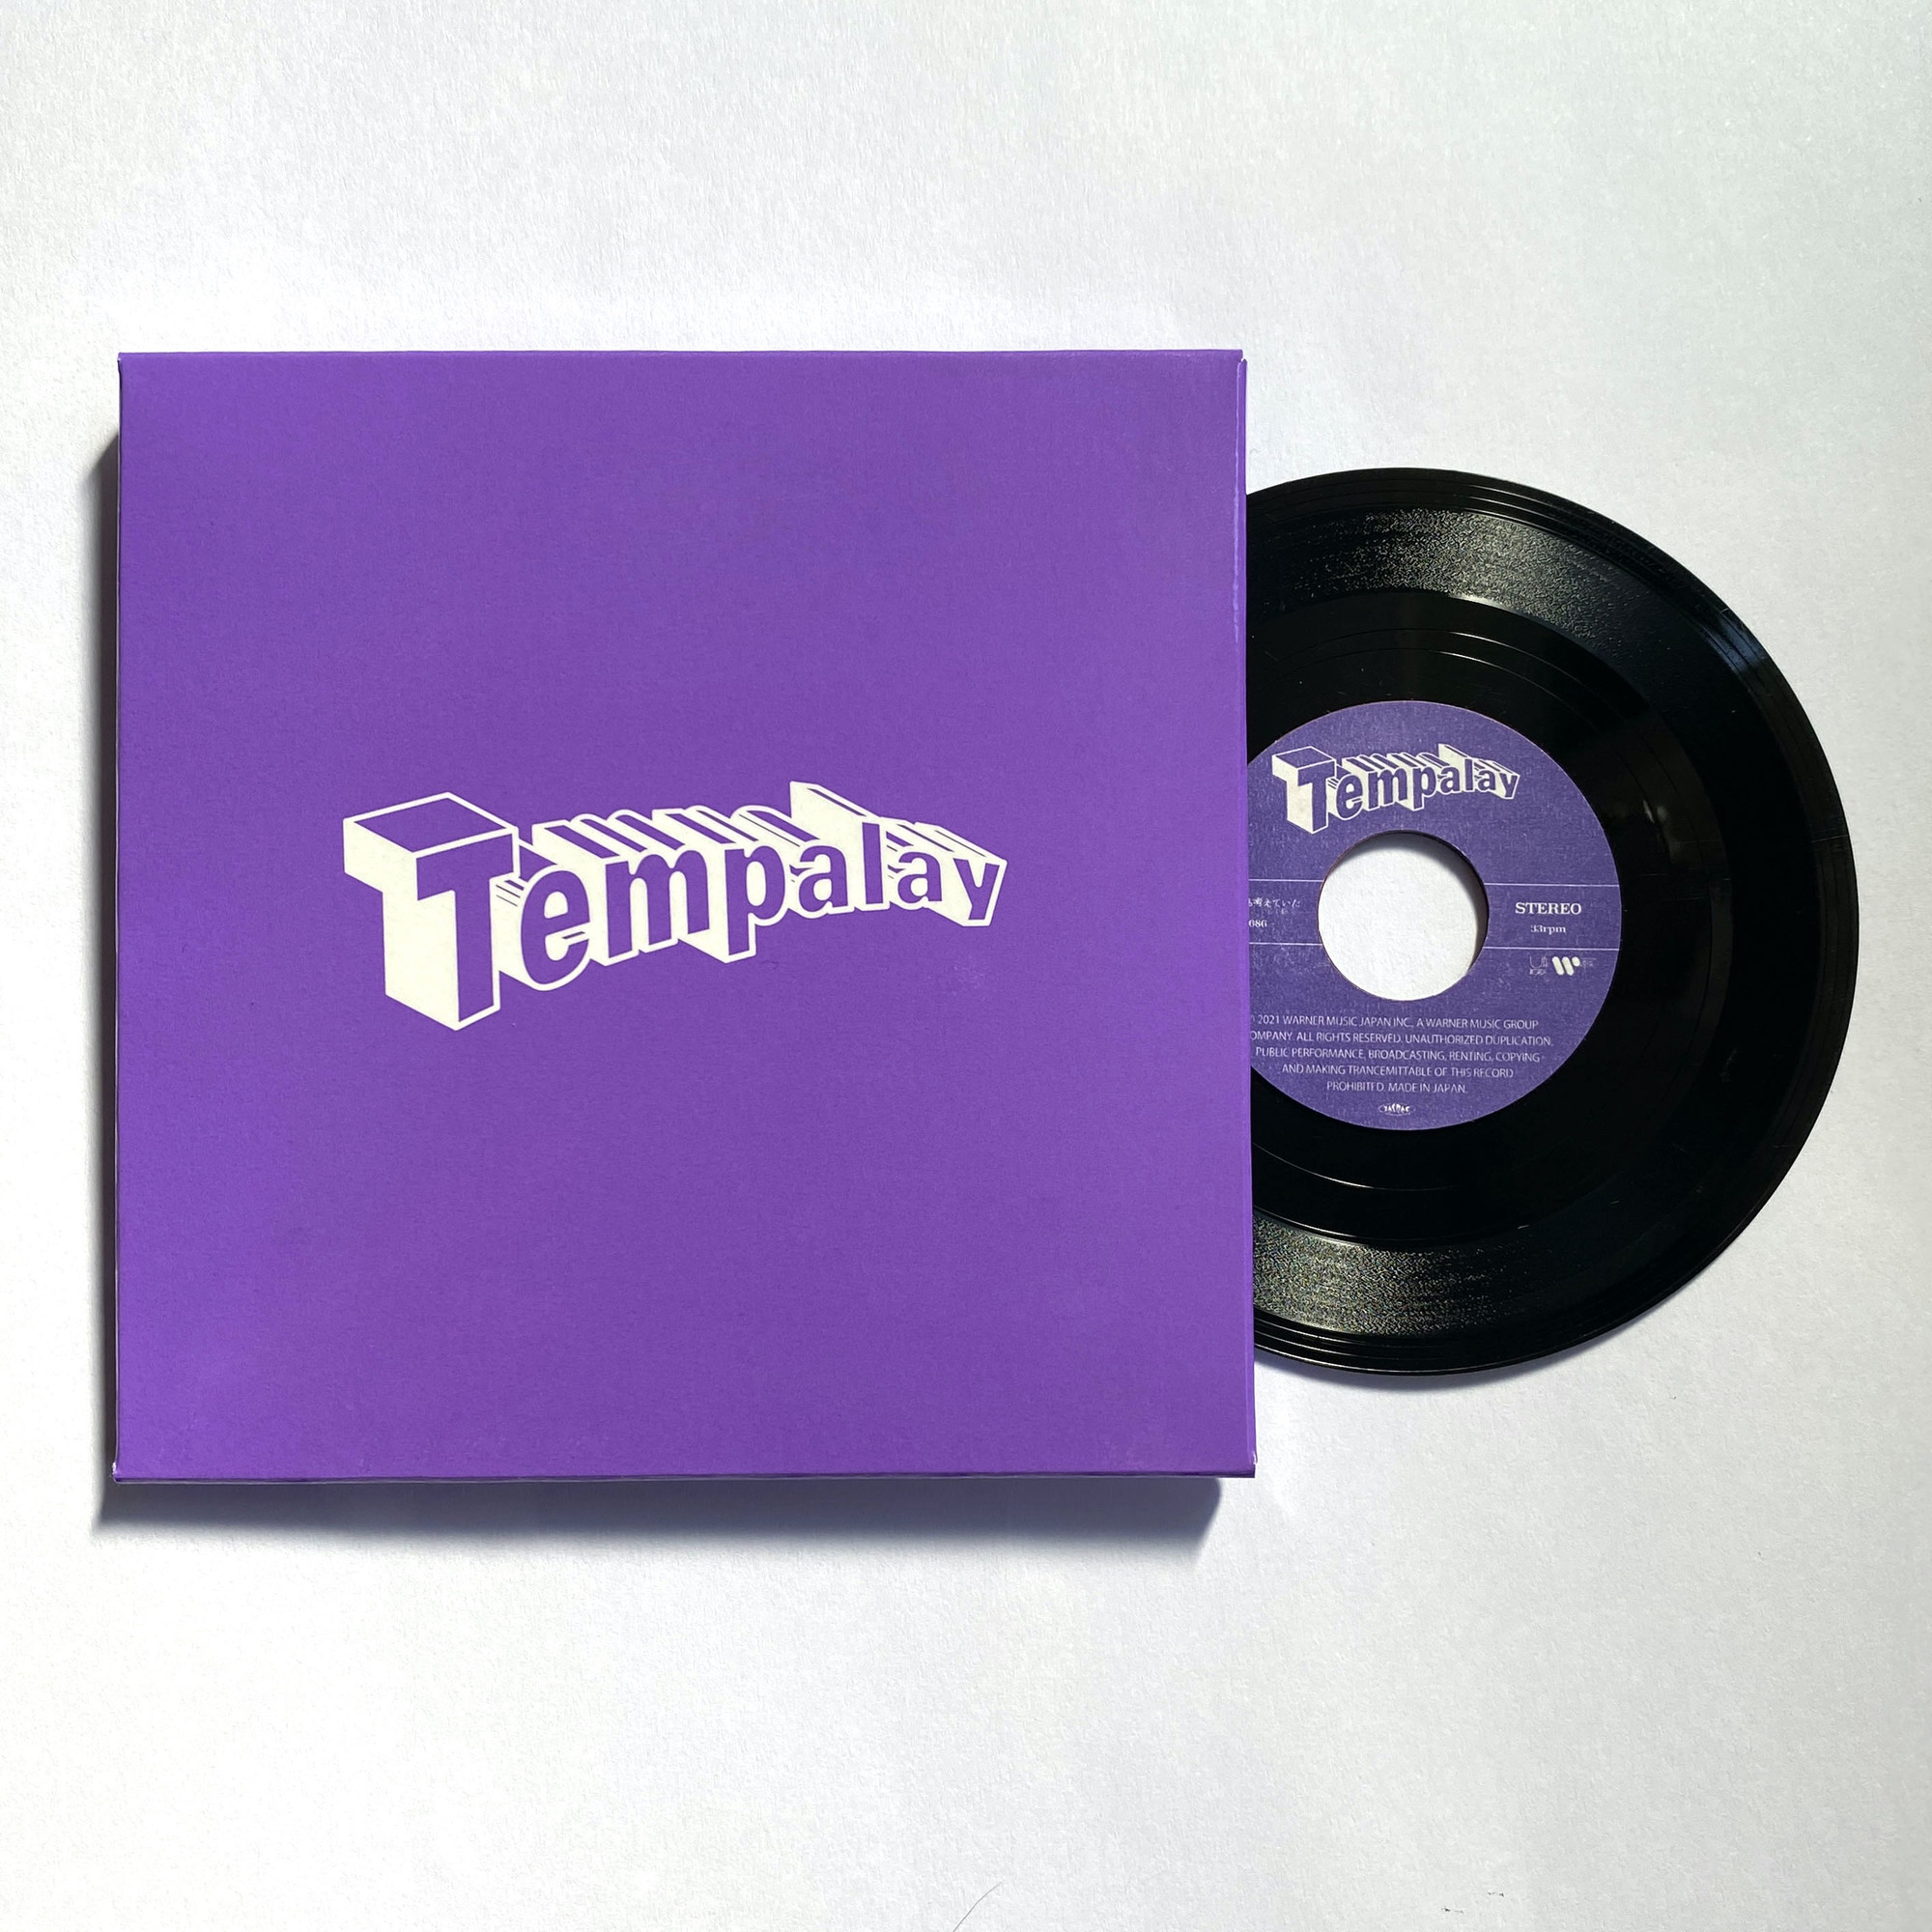 Tempalay レコード From Japan 2 | www.causus.be